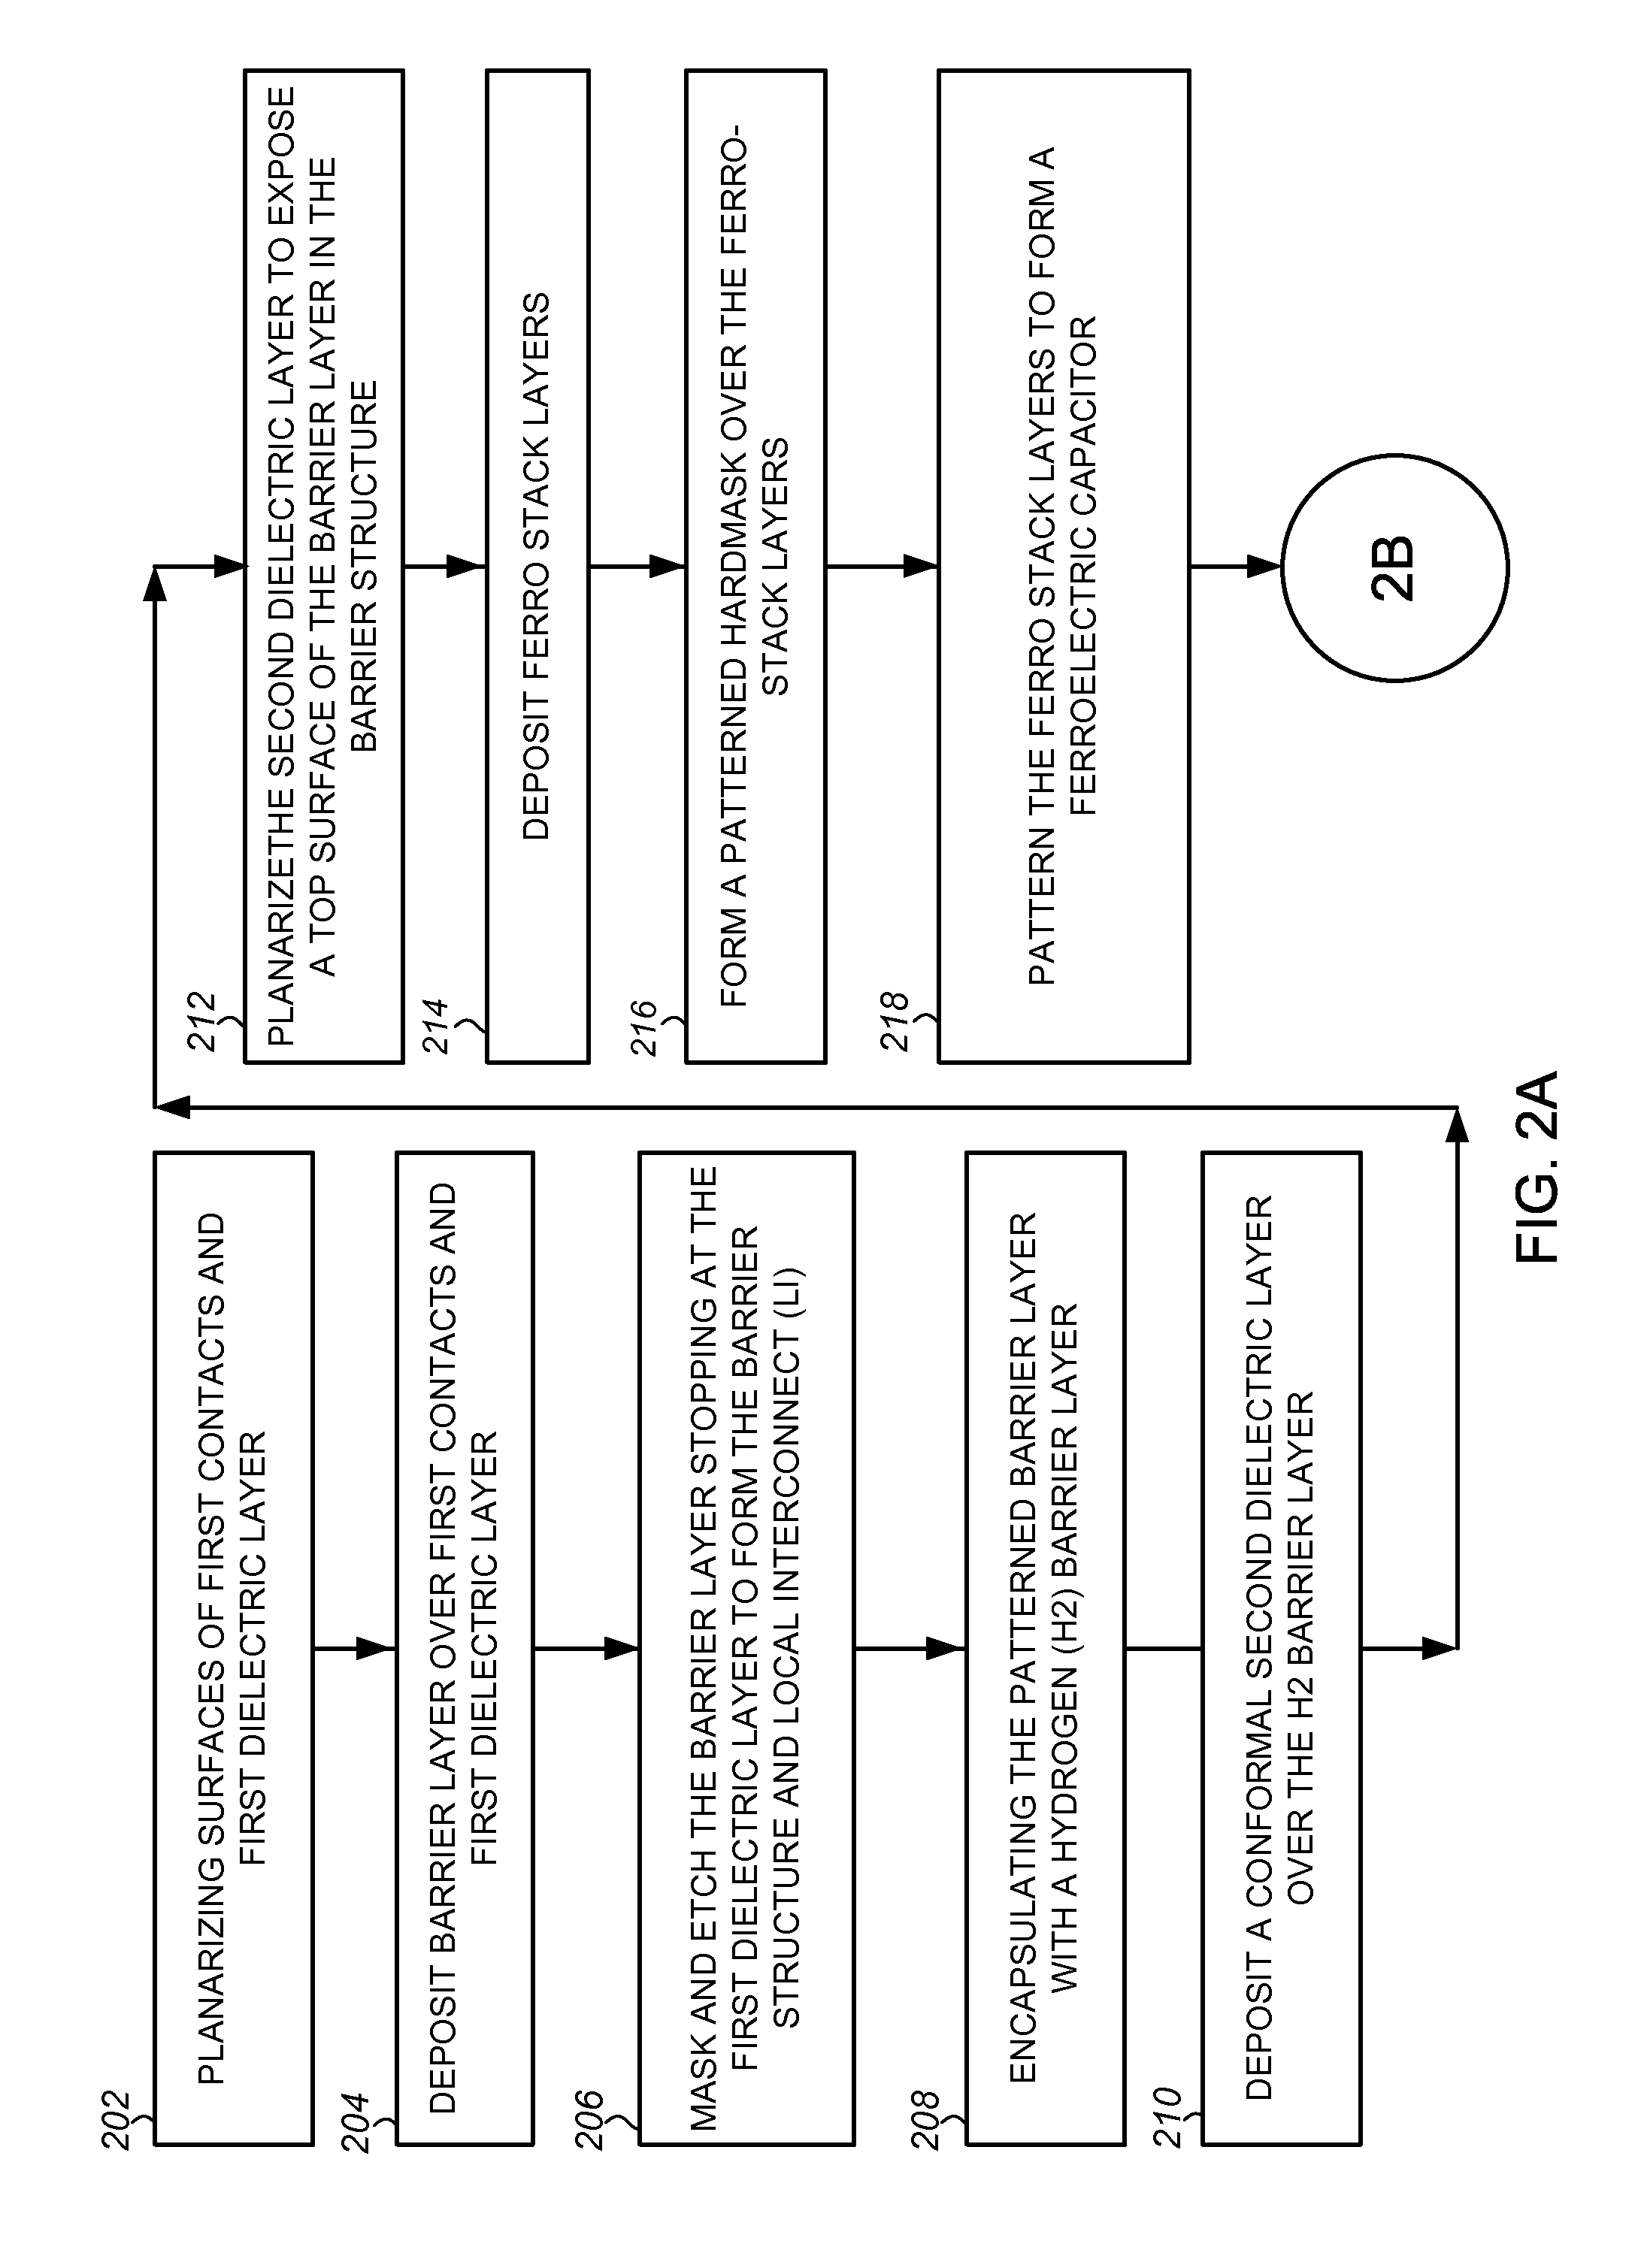 Methods of fabricating an F-RAM